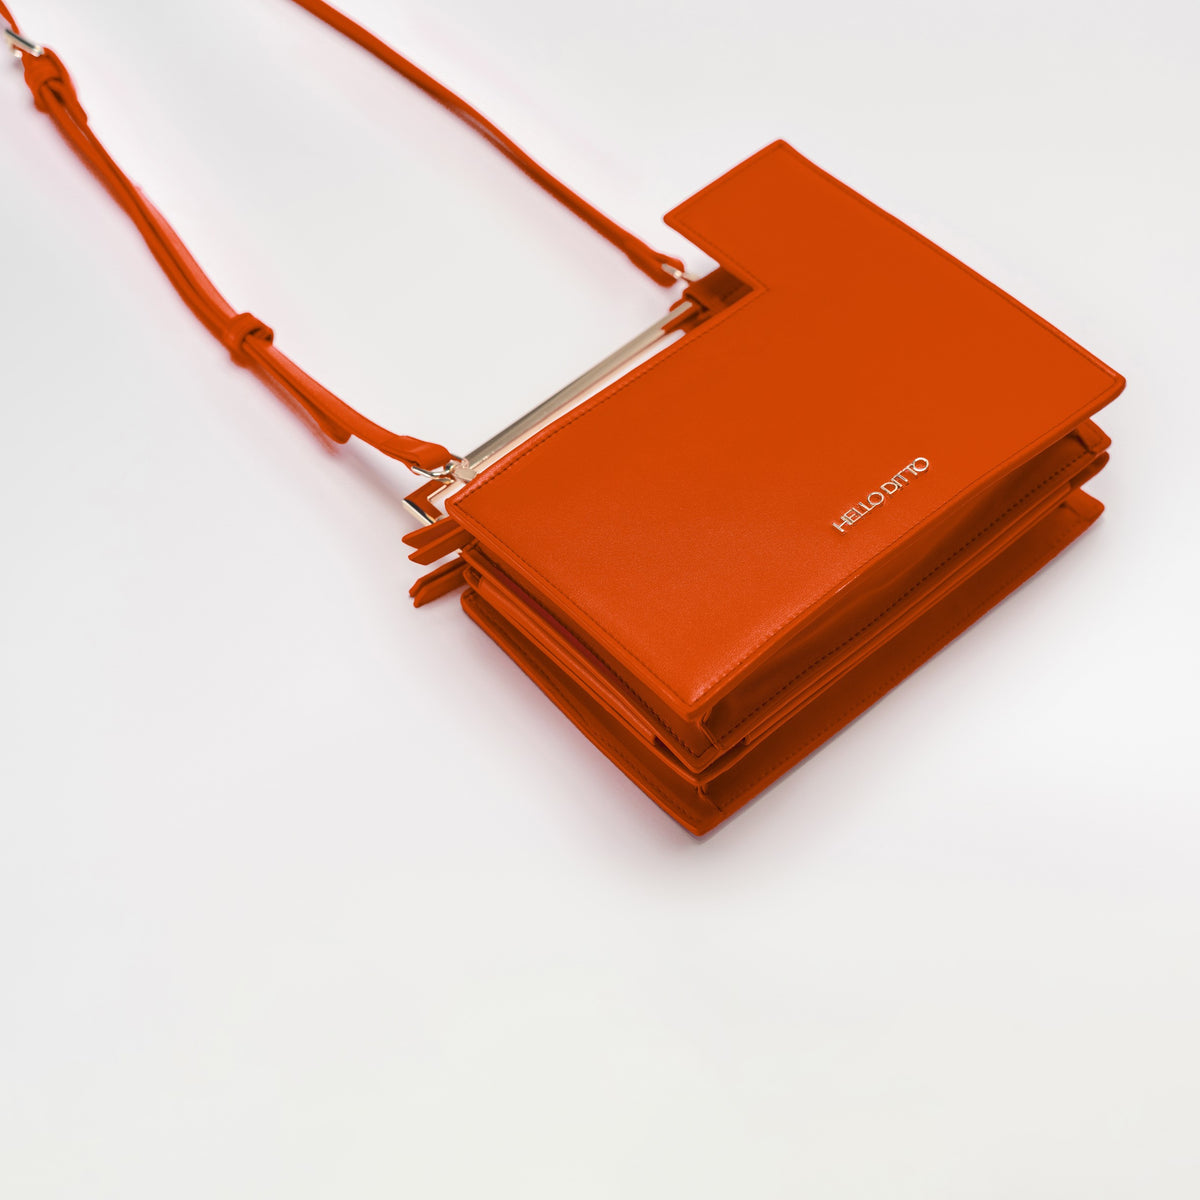 alanis canvas bag | valencia orange